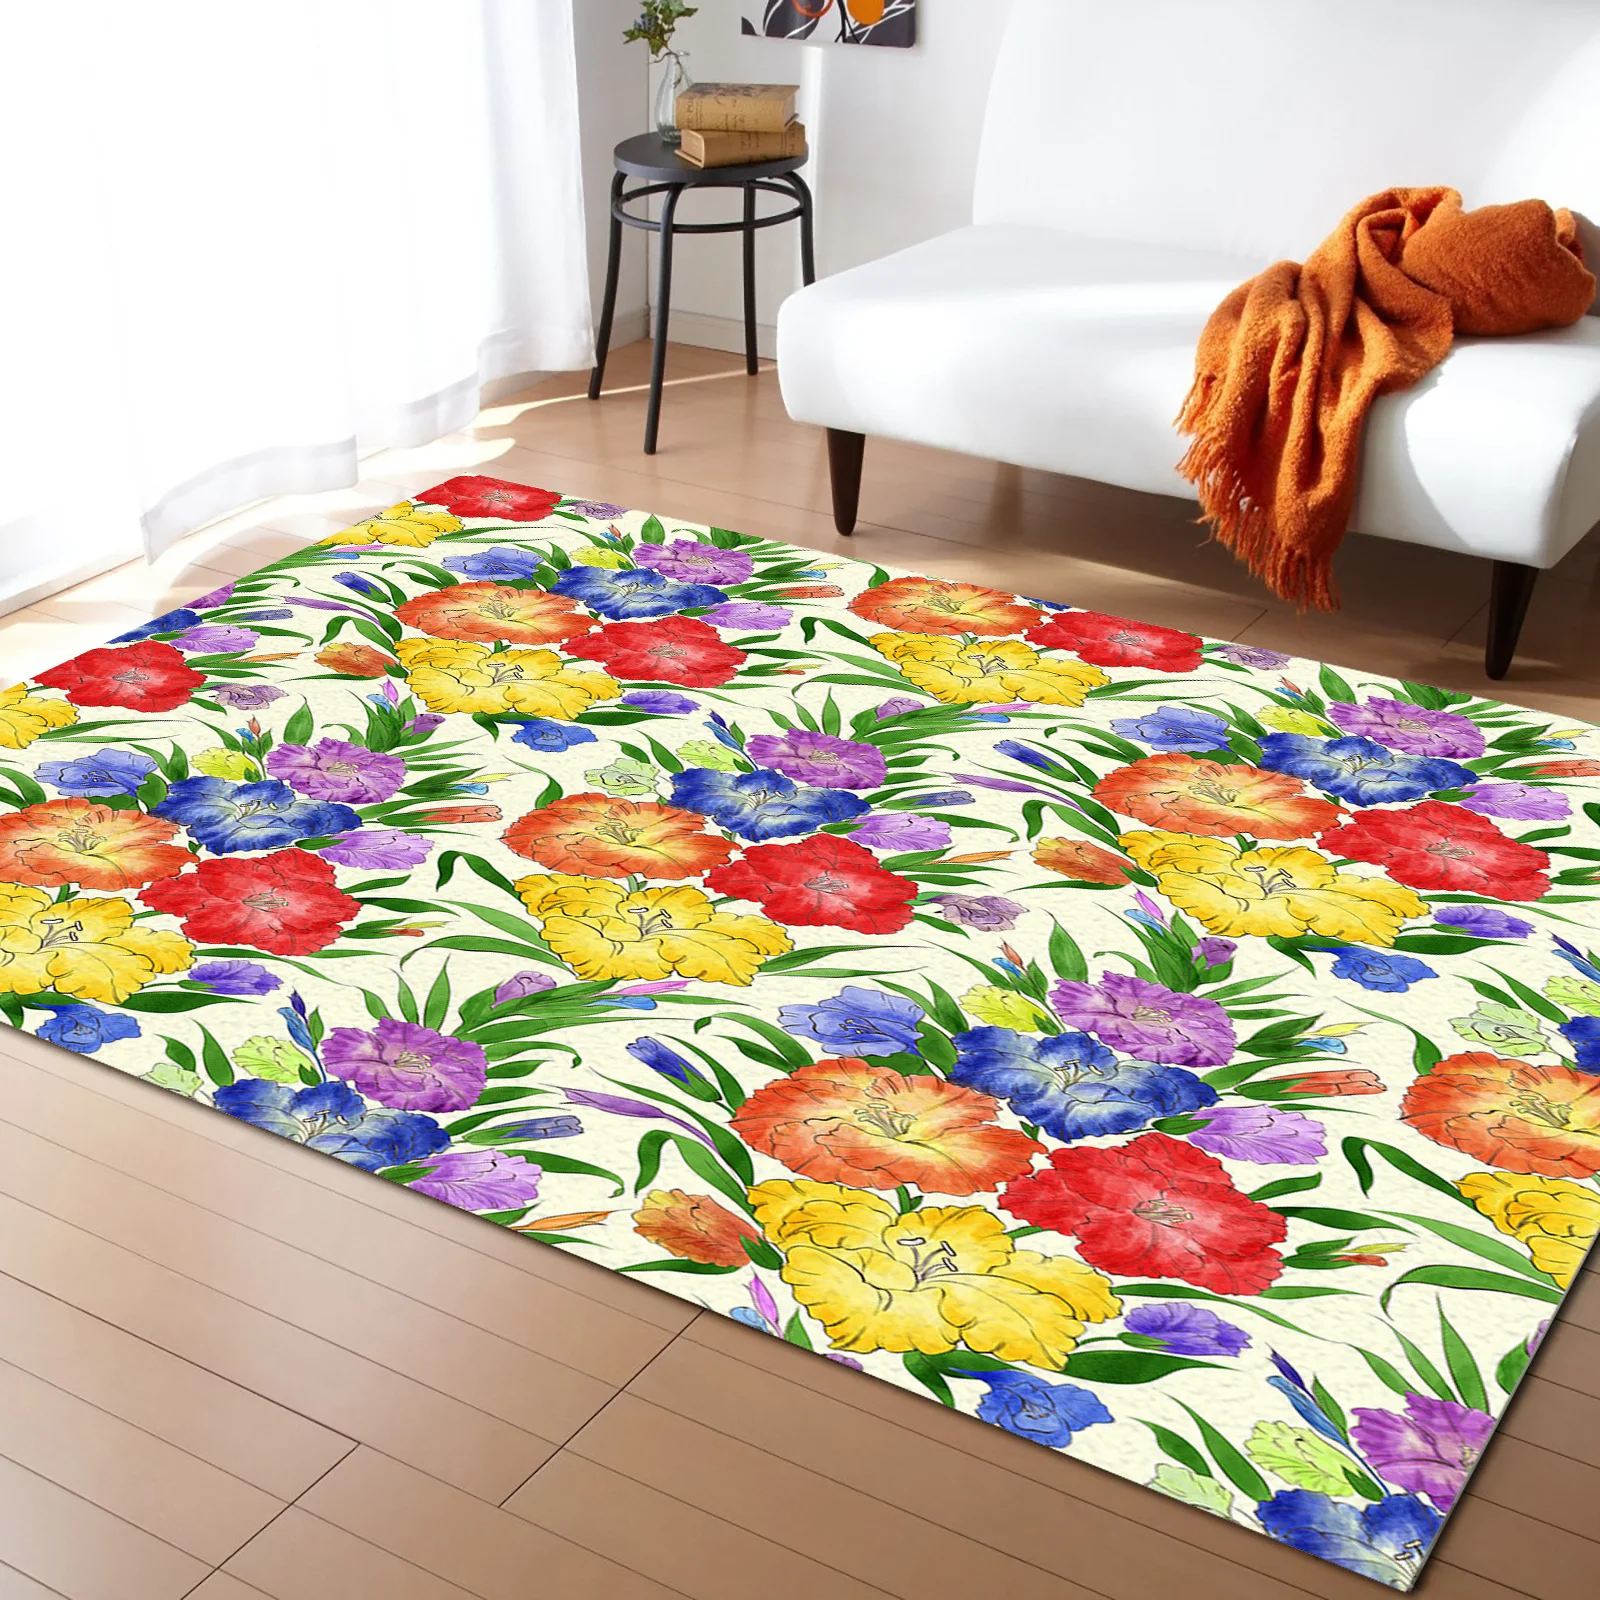 

Botanical Iris Flower Carpets for Living Room Decor Large Area Rugs Bedroom Carpet Home Living Room Decor Mat